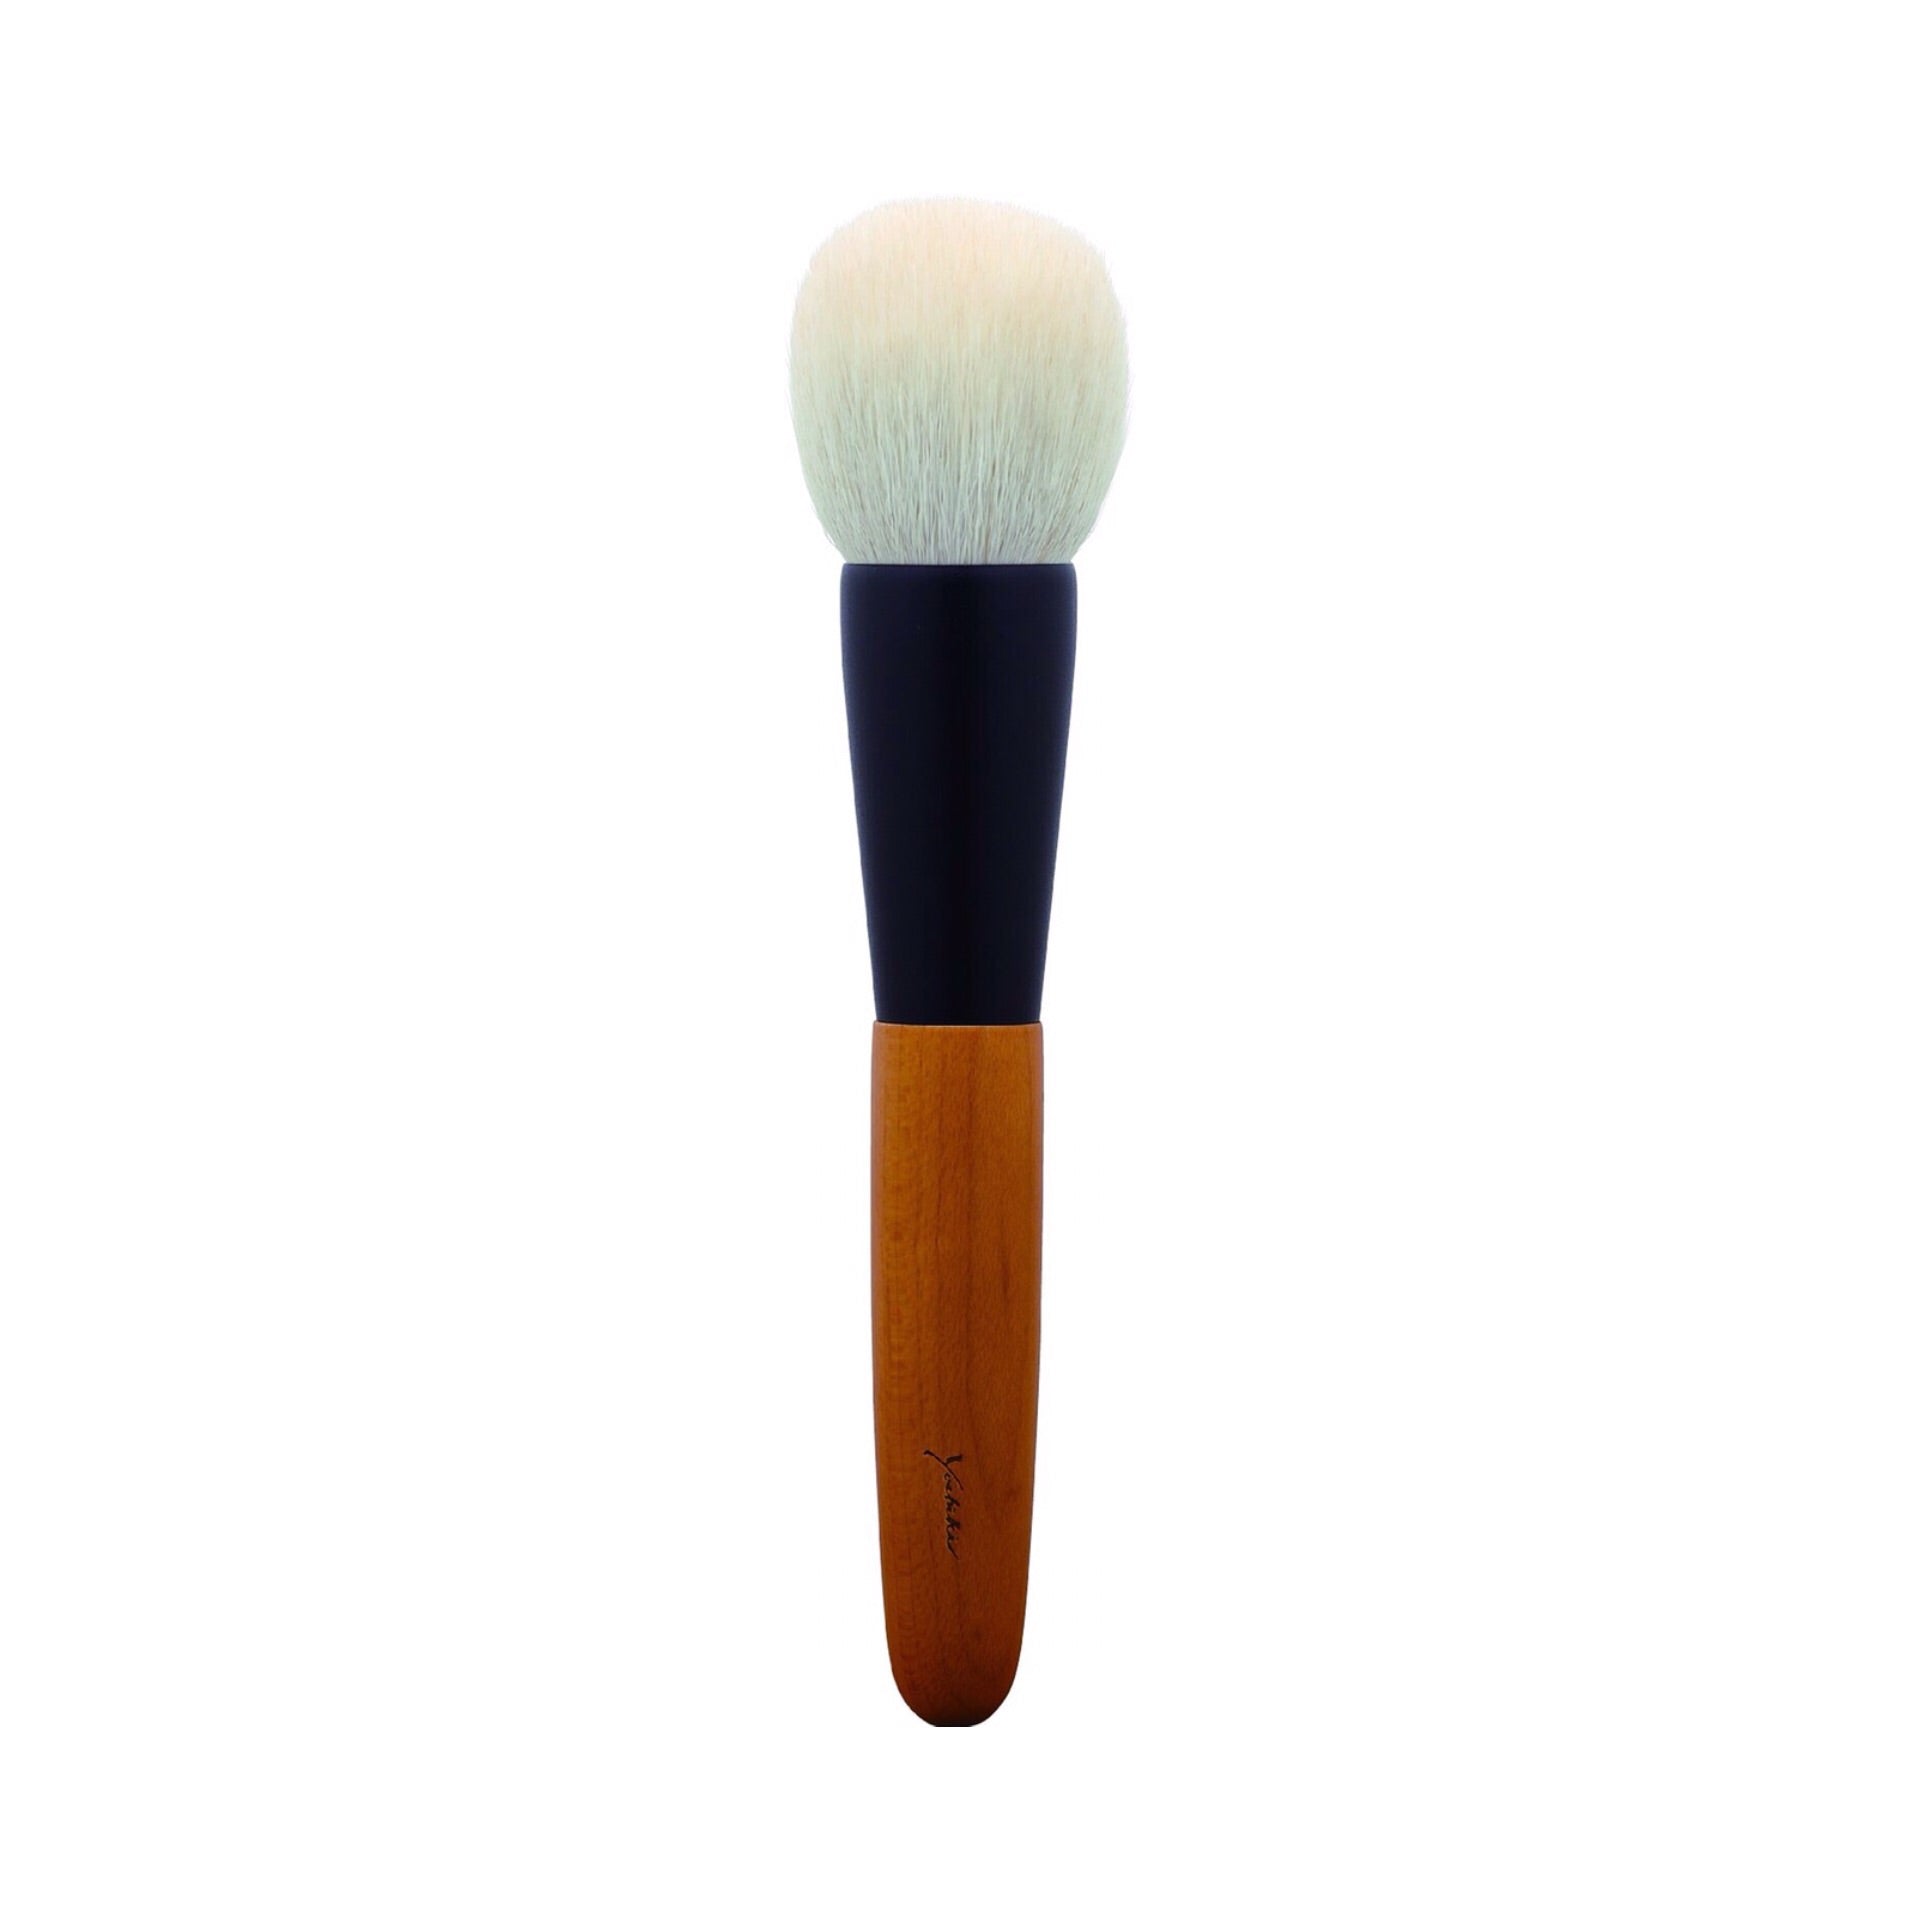 Koyudo Powder Brush Y-1, Yoshiki Series - Fude Beauty, Japanese Makeup Brushes